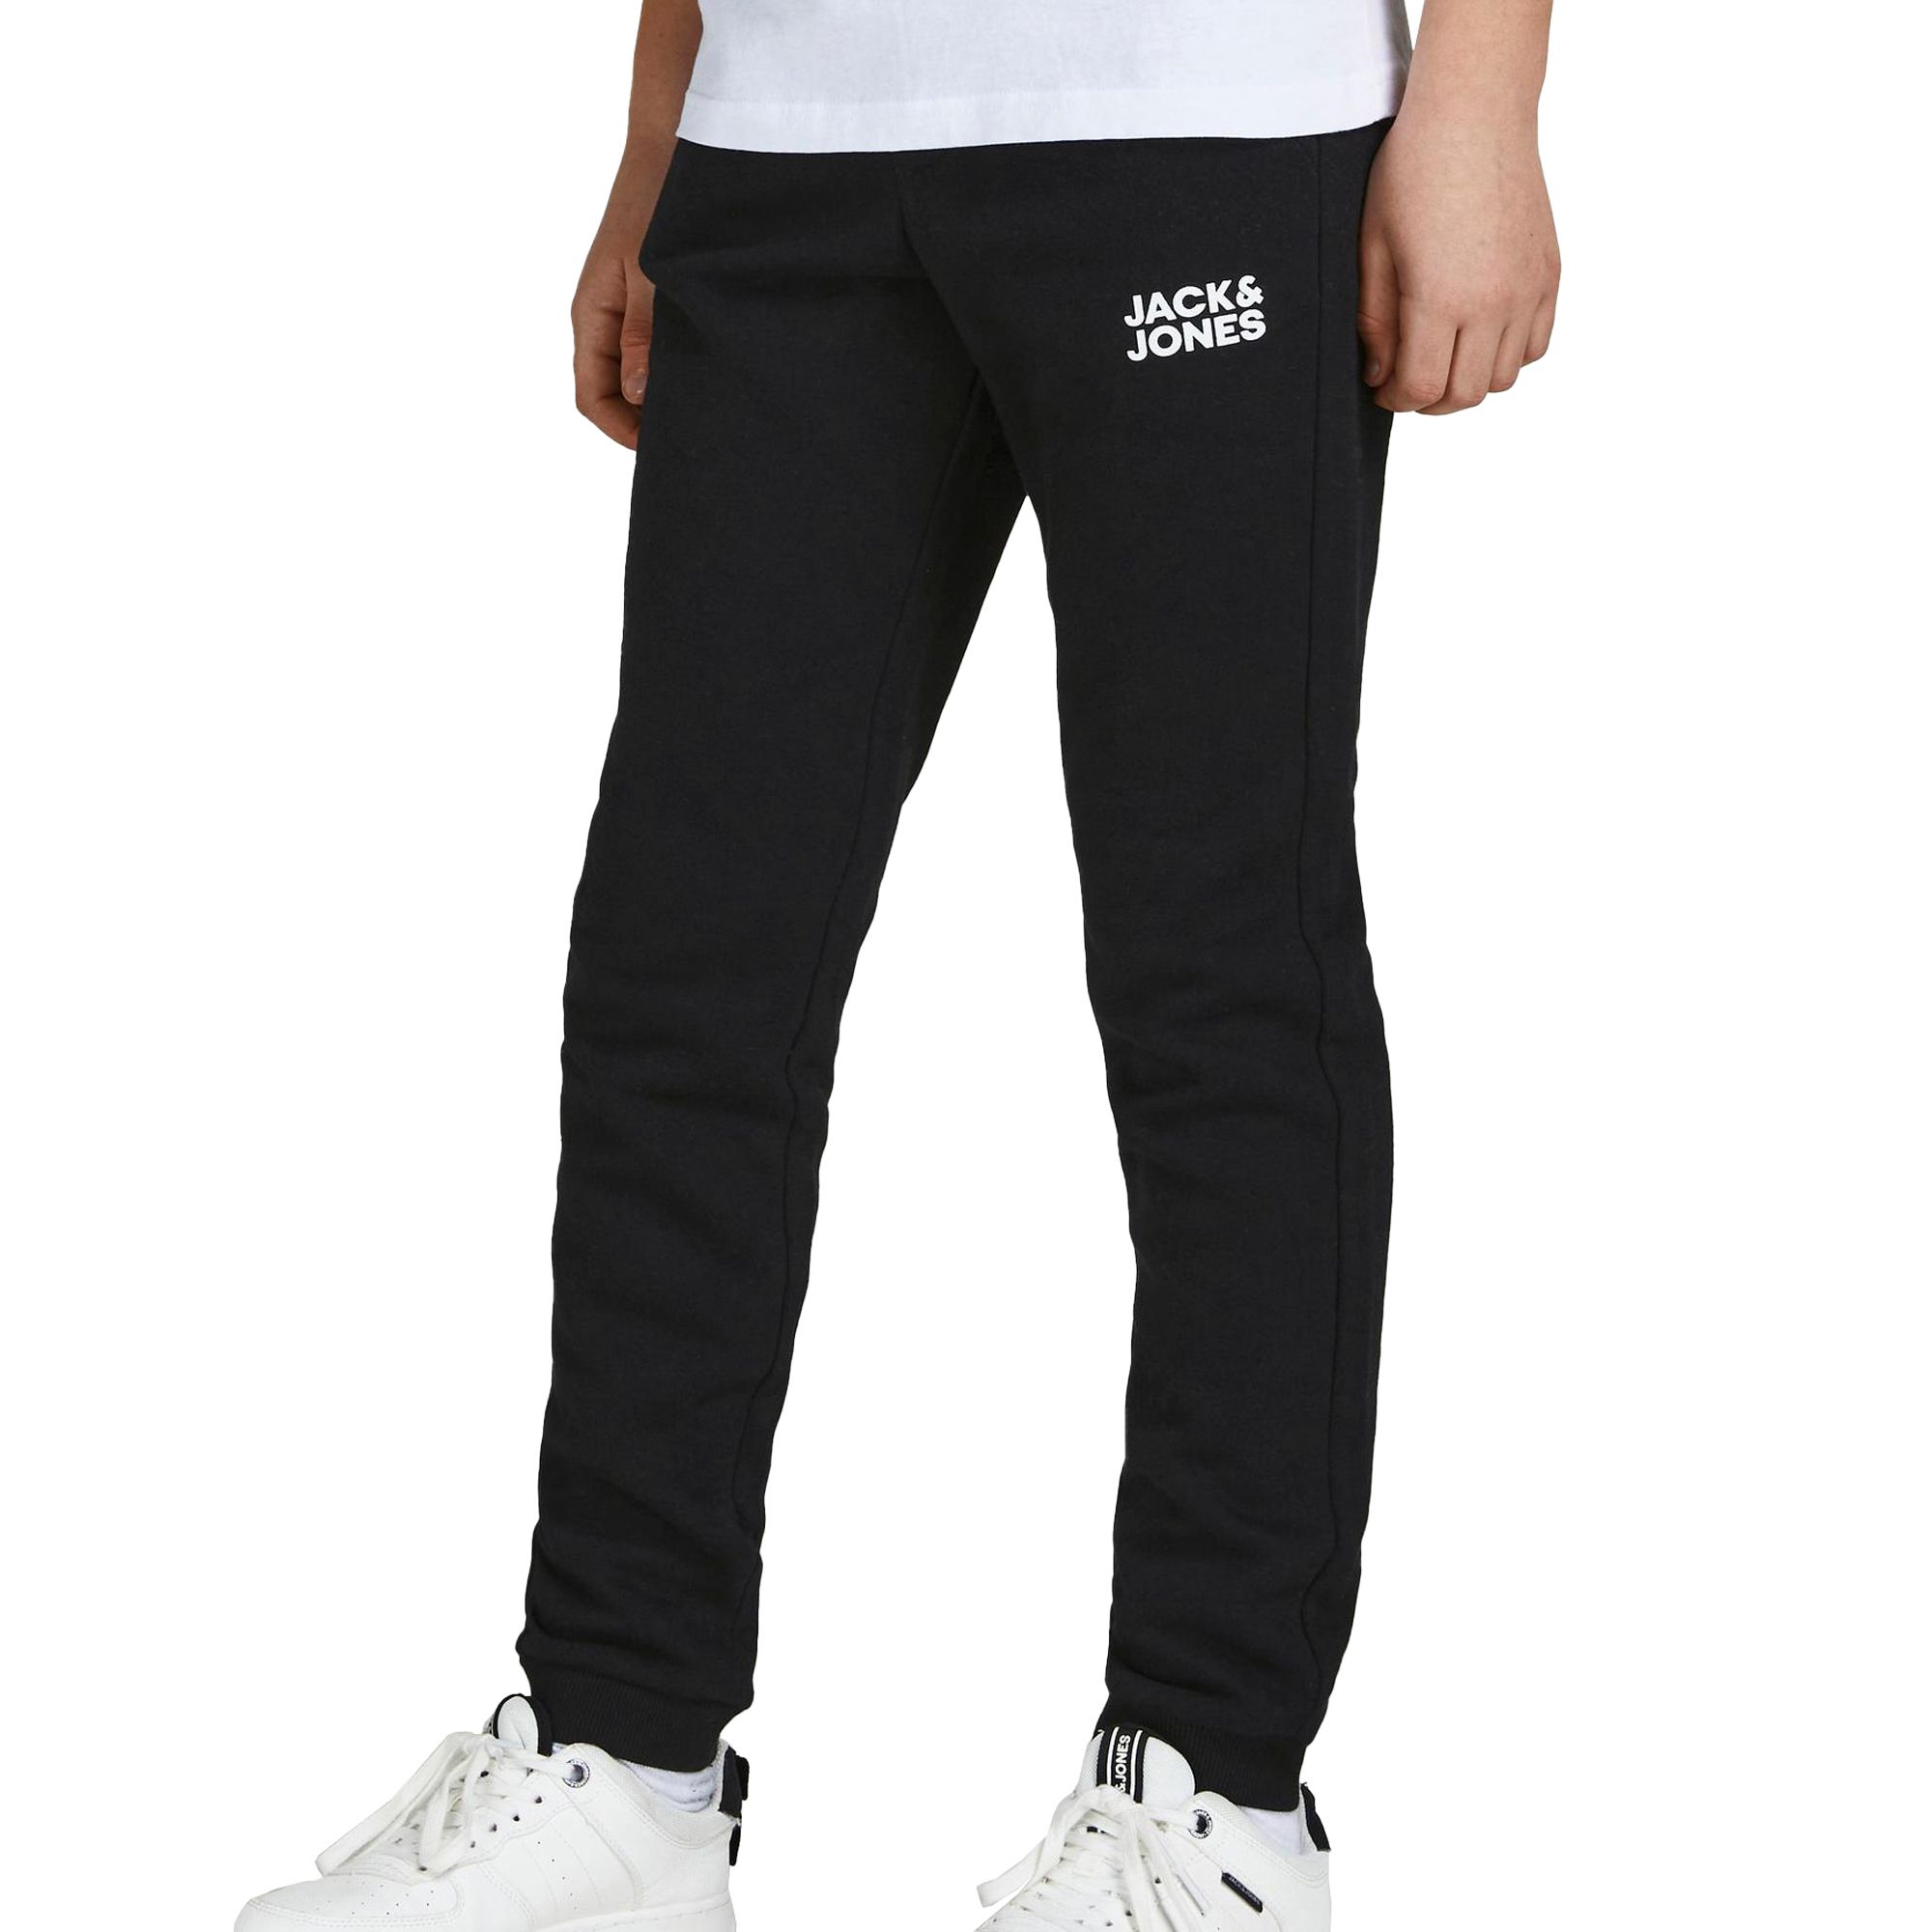 Denim Comfort Fit Jack Jones Mens Jeans at Rs 640/piece in Indore | ID:  25368491997